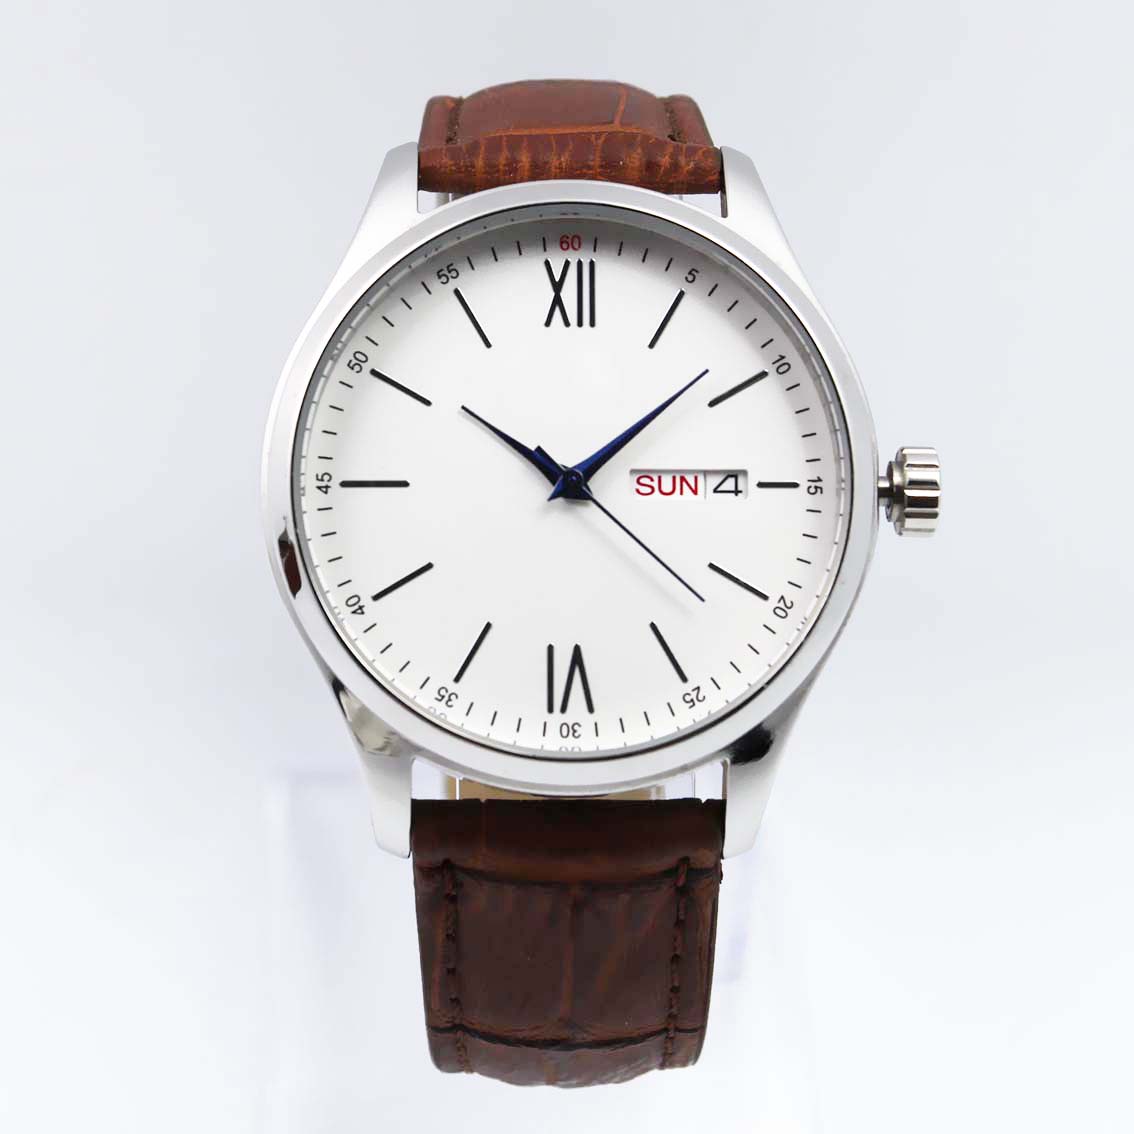 #02076Men's wristwatch quartz analog leather strap watch